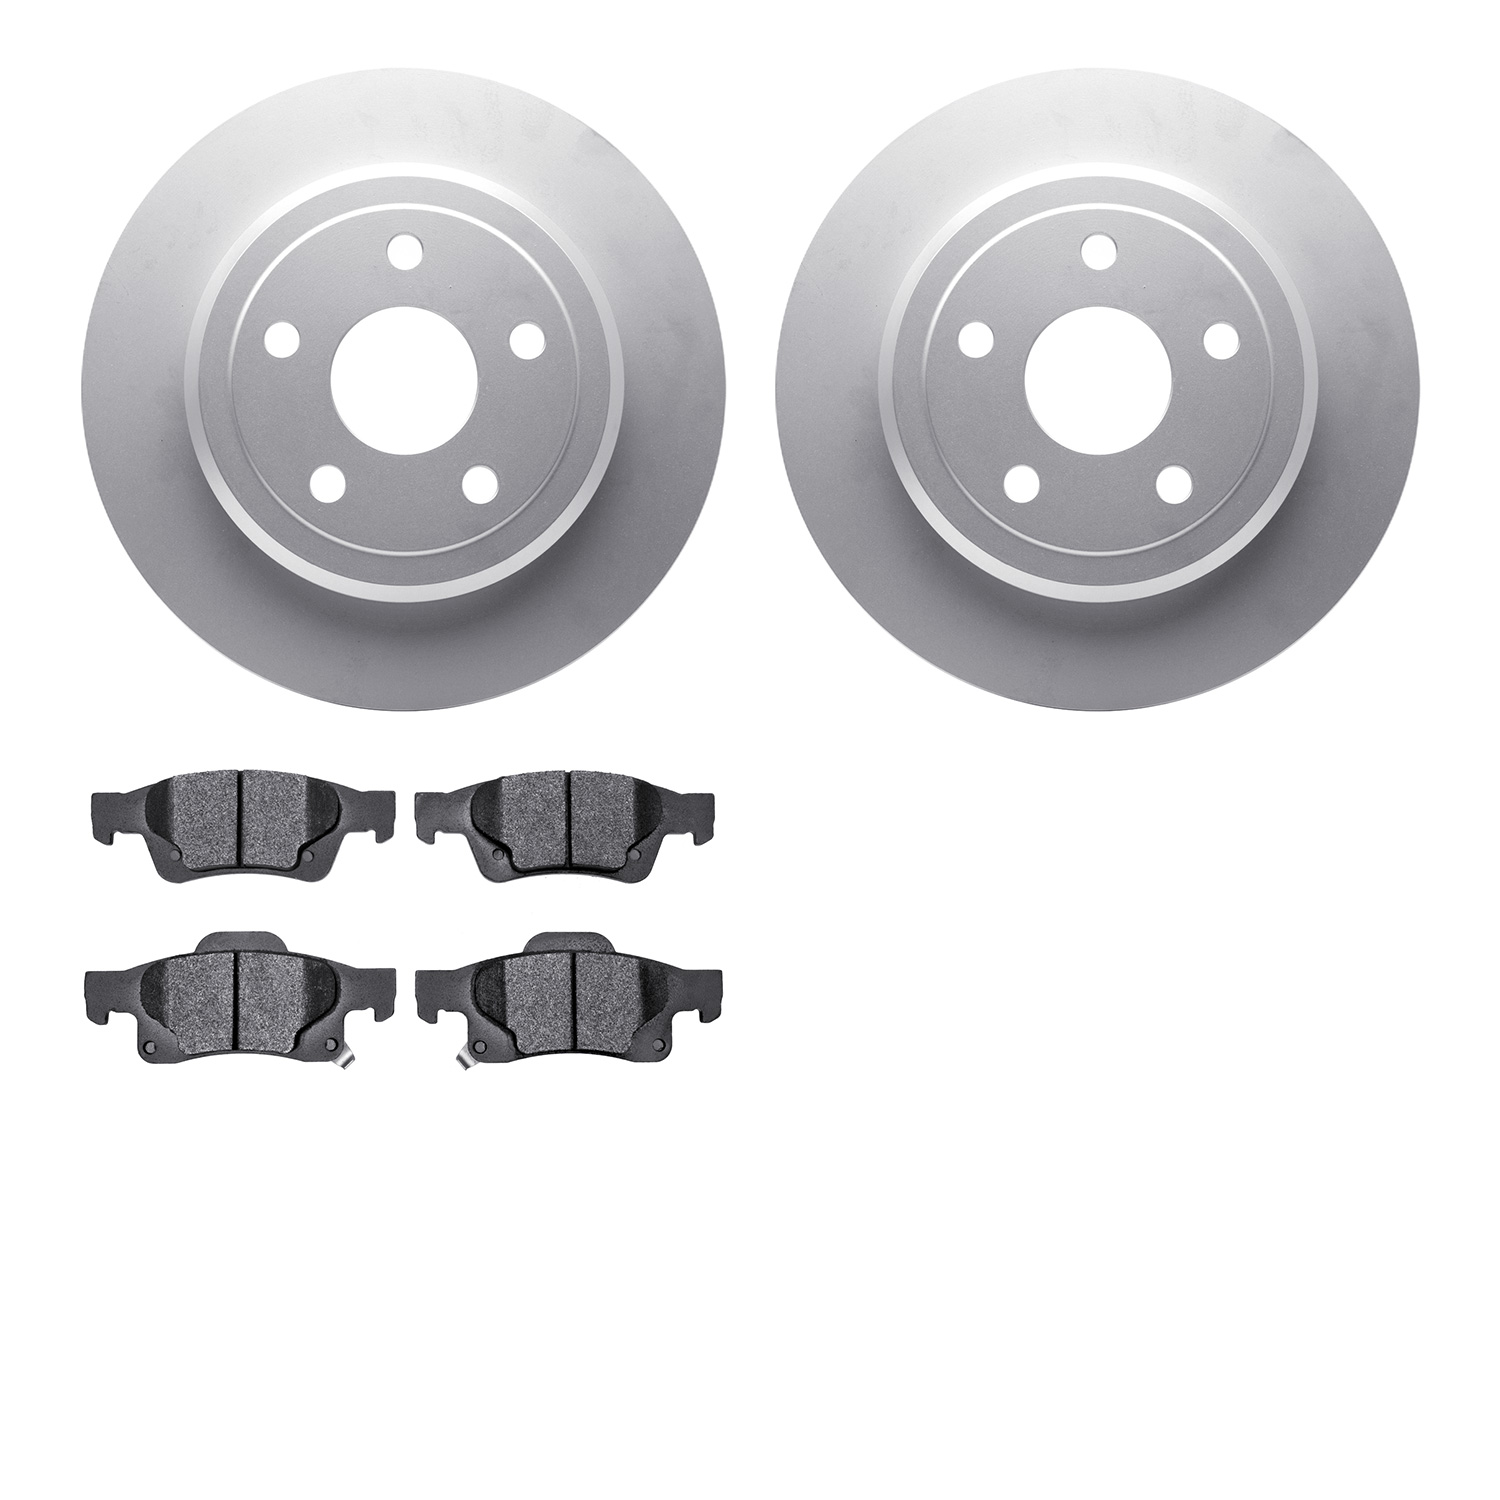 4402-42005 Geospec Brake Rotors with Ultimate-Duty Brake Pads Kit, Fits Select Mopar, Position: Rear